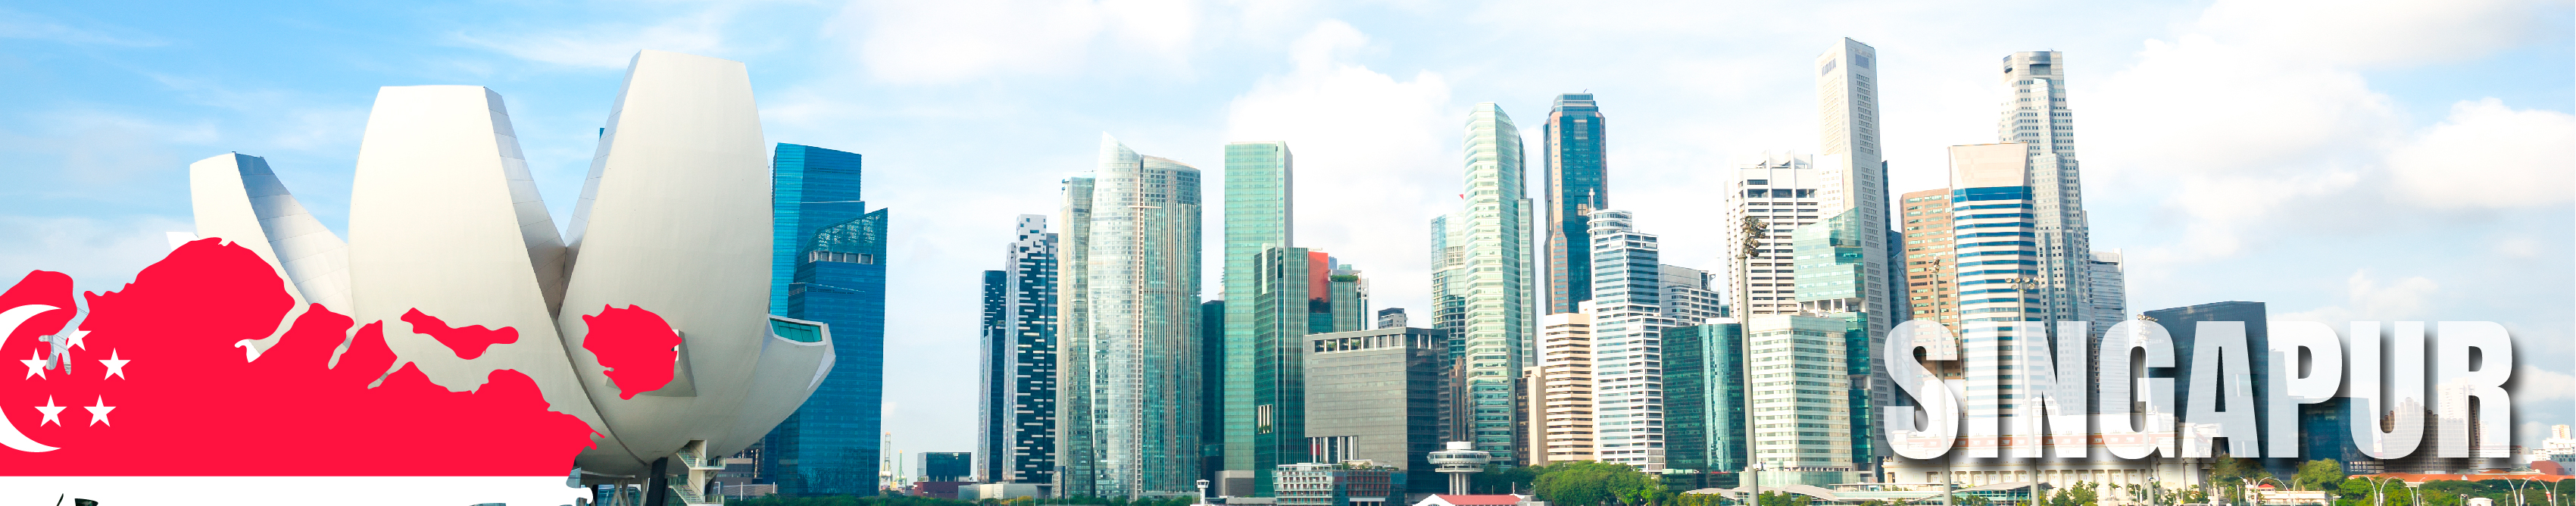 vista panorámica de Singapur, foto de día con edificios modernos